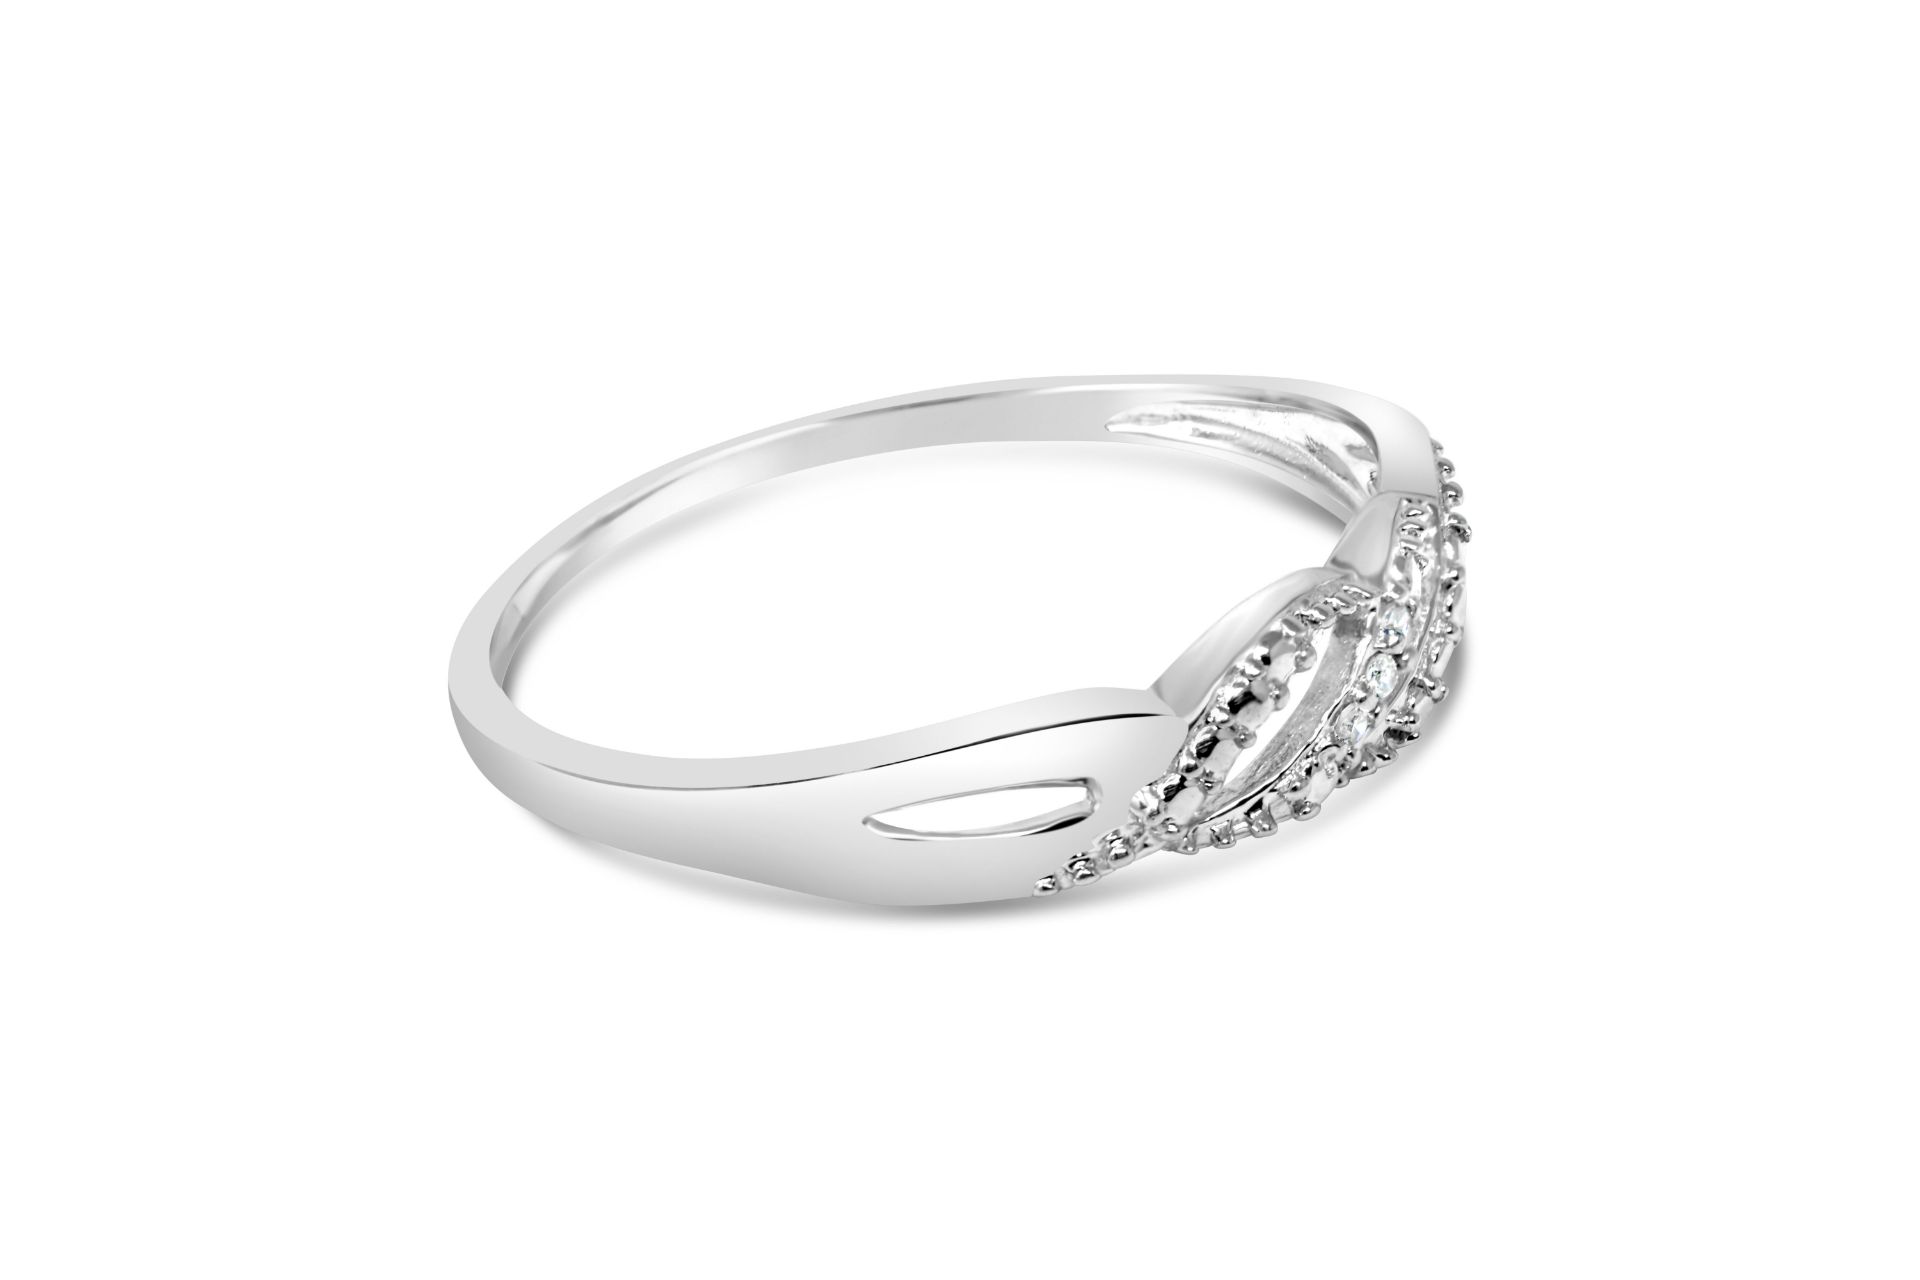 White Gold Diamond Ring - Image 2 of 2